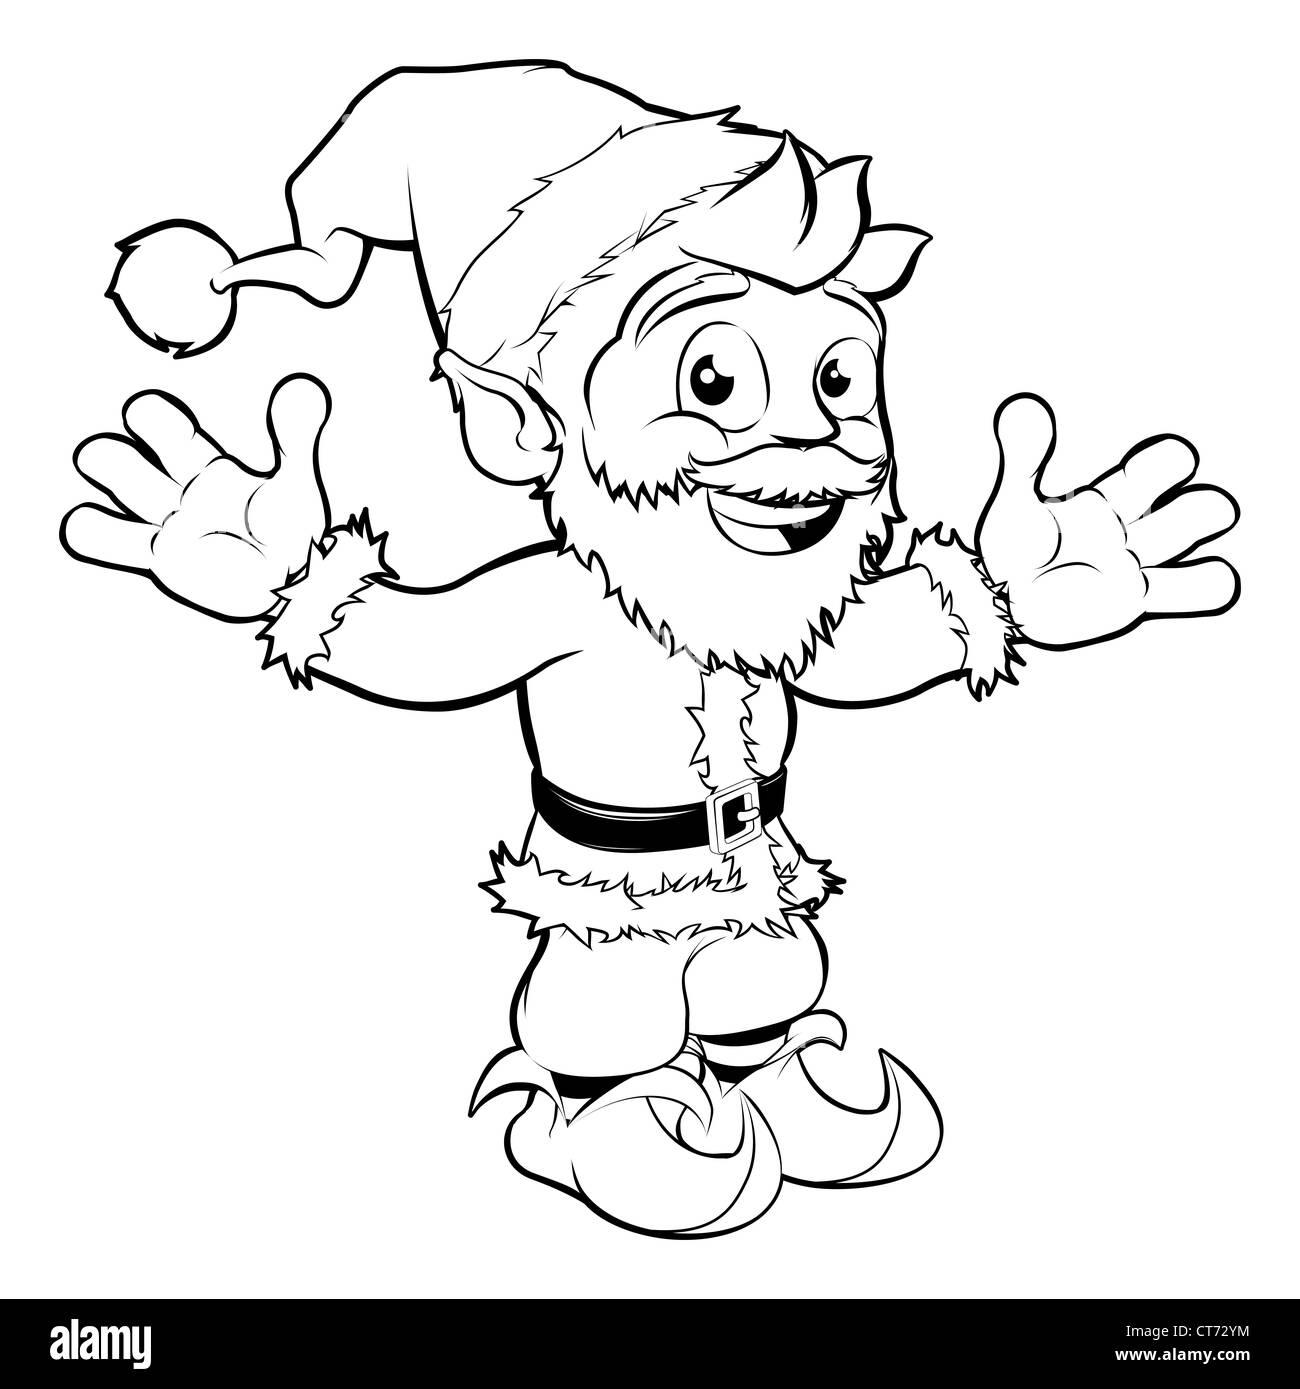 Monochrome Christmas drawing of happy Santa smiling and waving Stock Photo